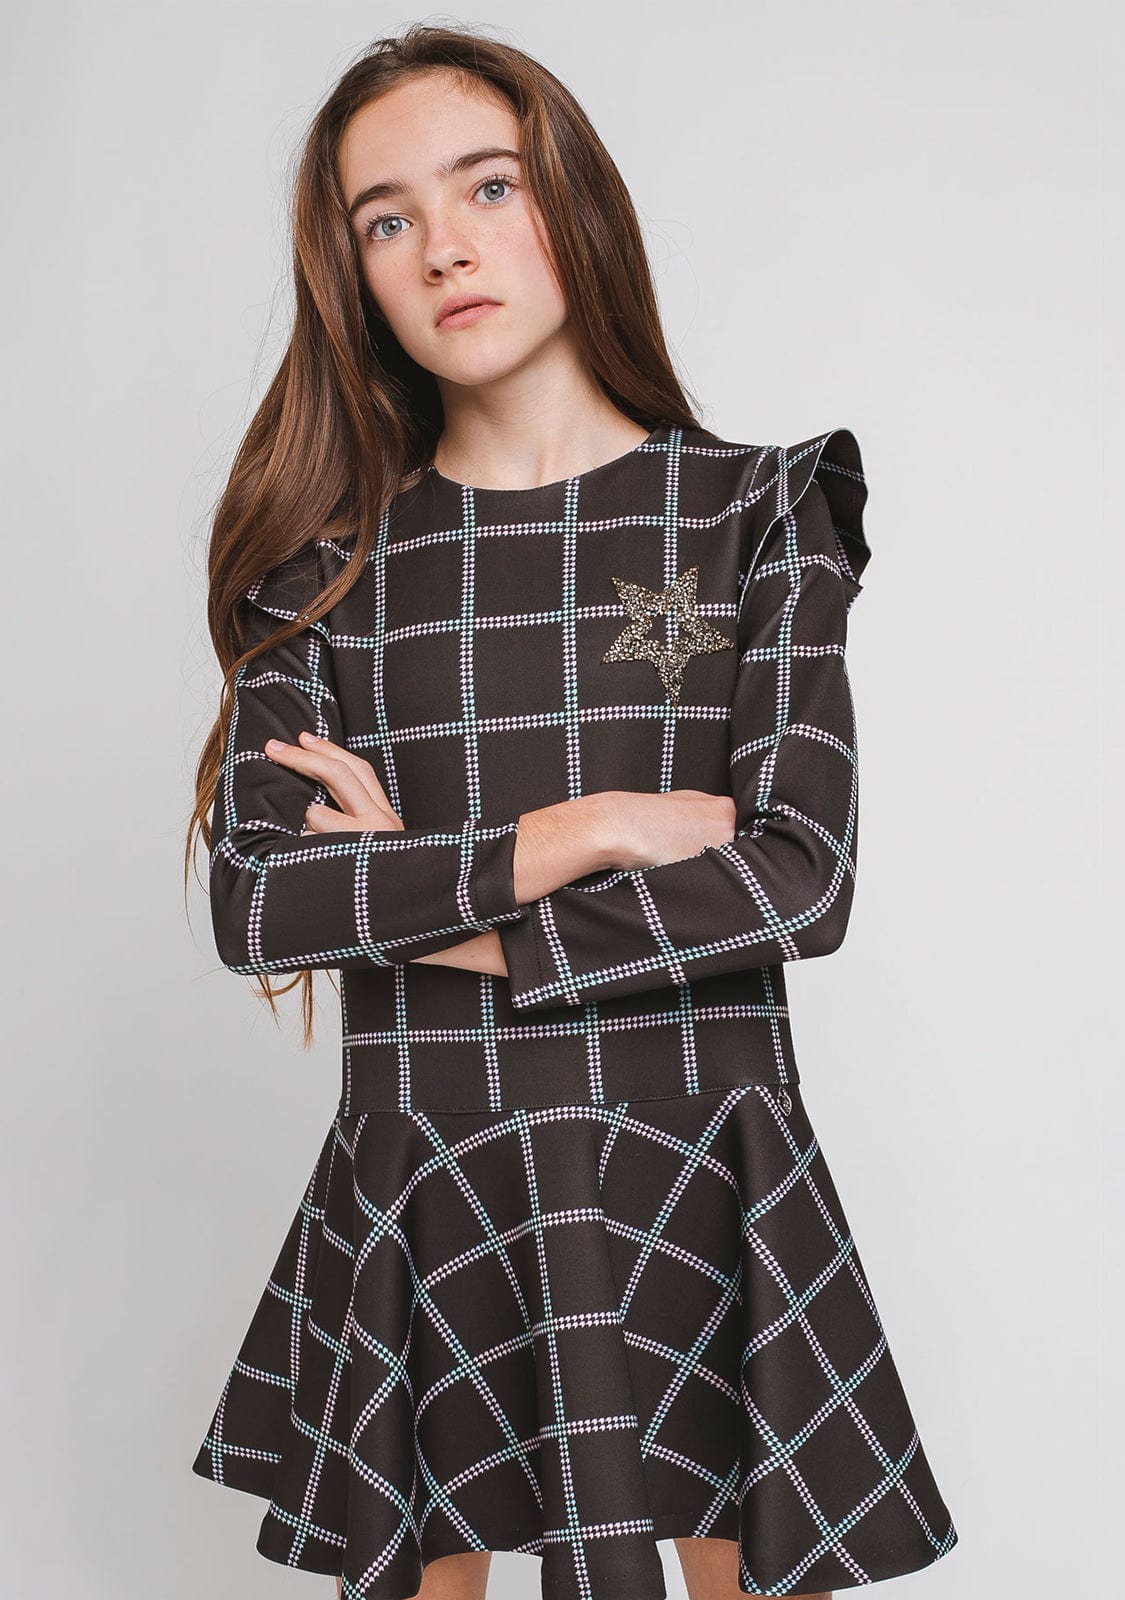 CONGUITOS TEXTIL Clothing Girl's Black Squares Dress